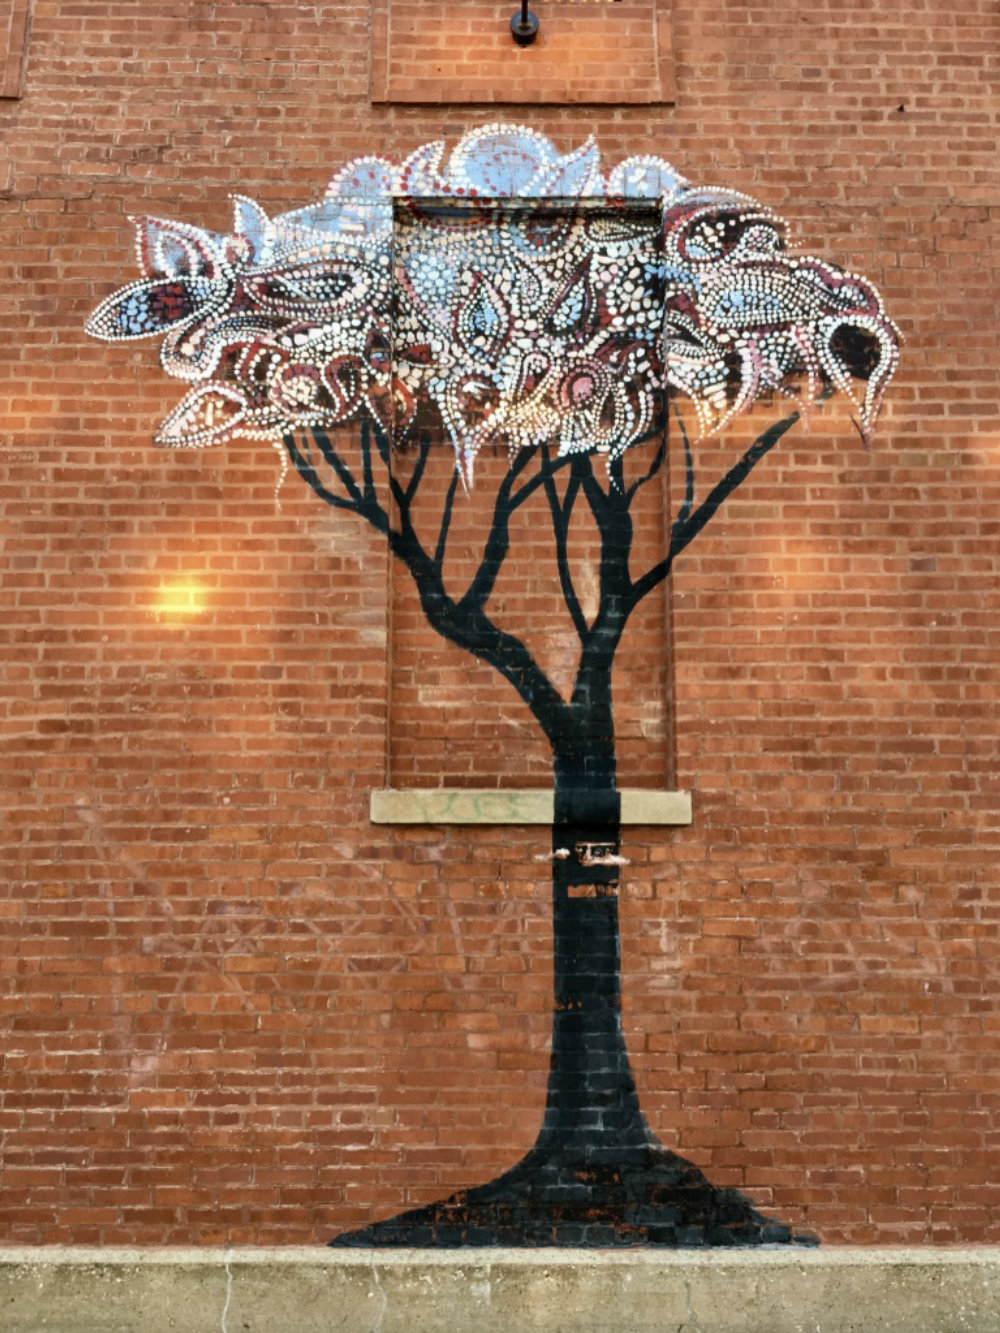 mural in Chicago by artist Luis Valle.